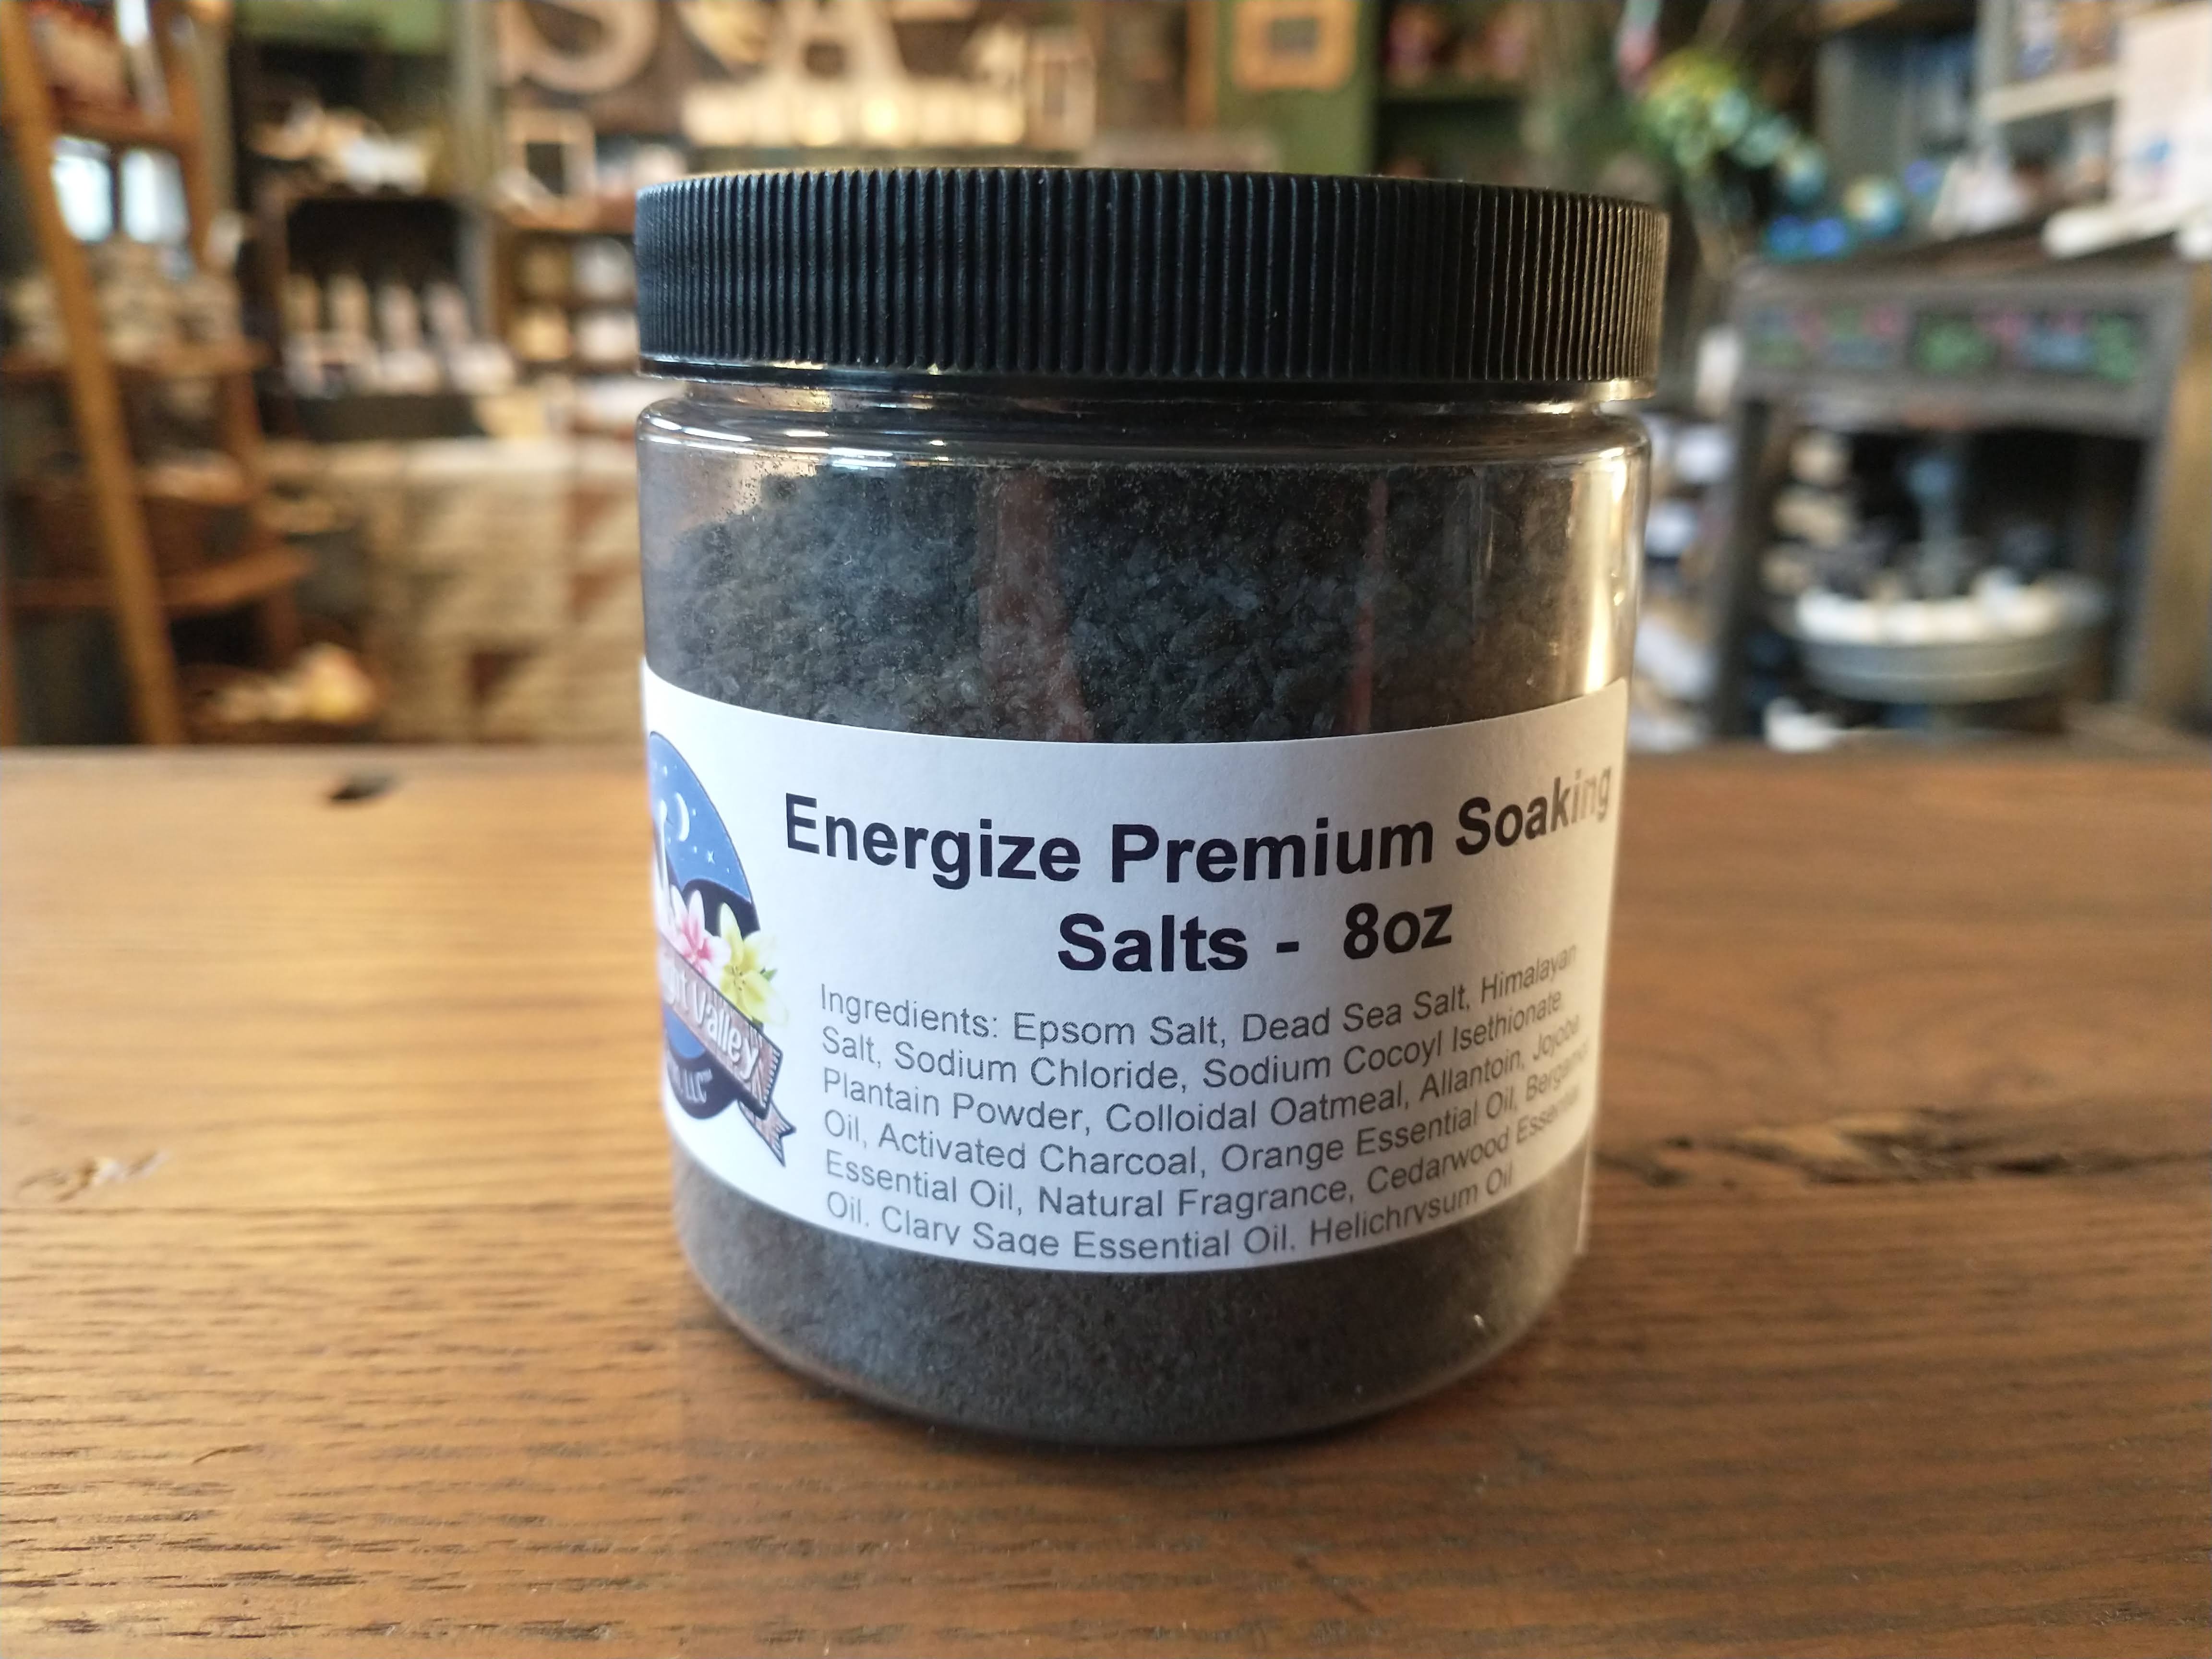 Energize Premium Soaking Bath Salts